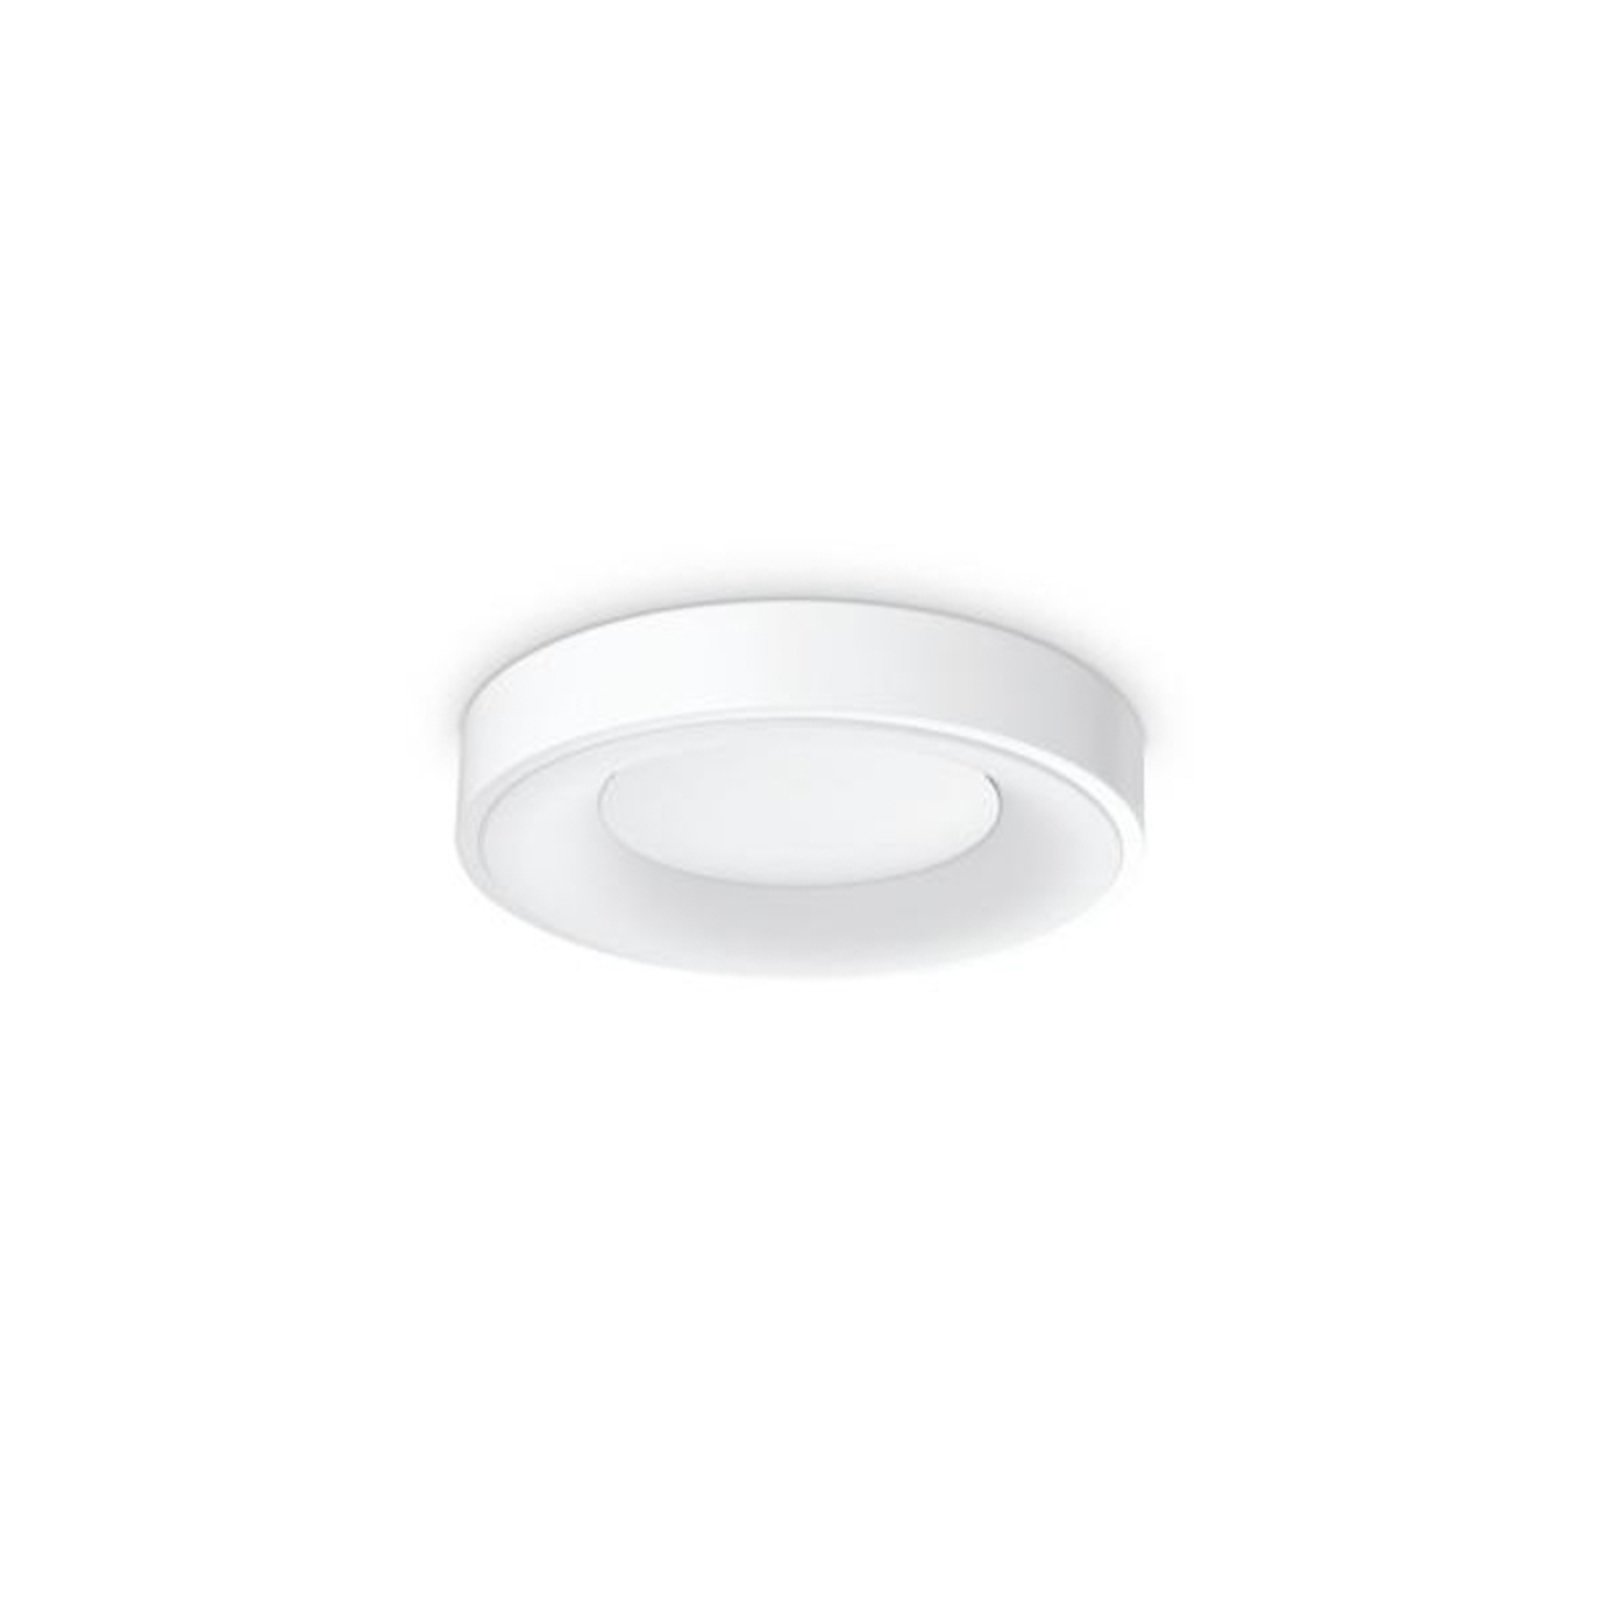 Ideal Lux plafondlamp Planet, wit, Ø 30 cm, metaal